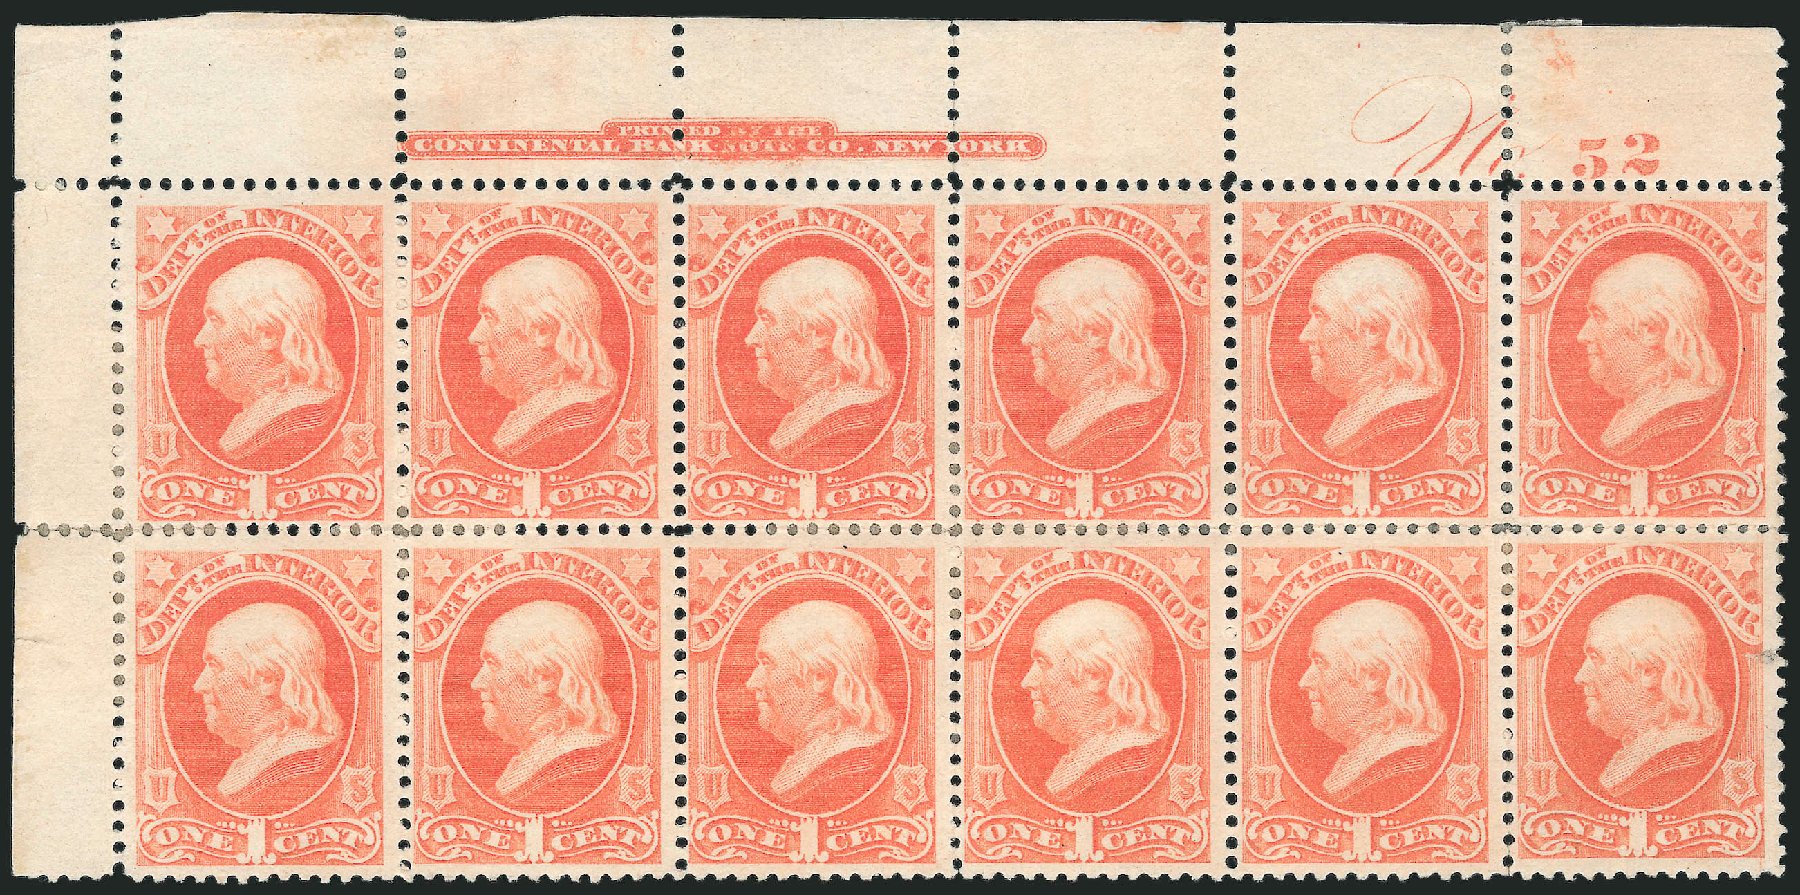 US Stamp Price Scott Catalogue # O96 - 1879 1c Interior Official. Robert Siegel Auction Galleries, Nov 2014, Sale 1085, Lot 4187